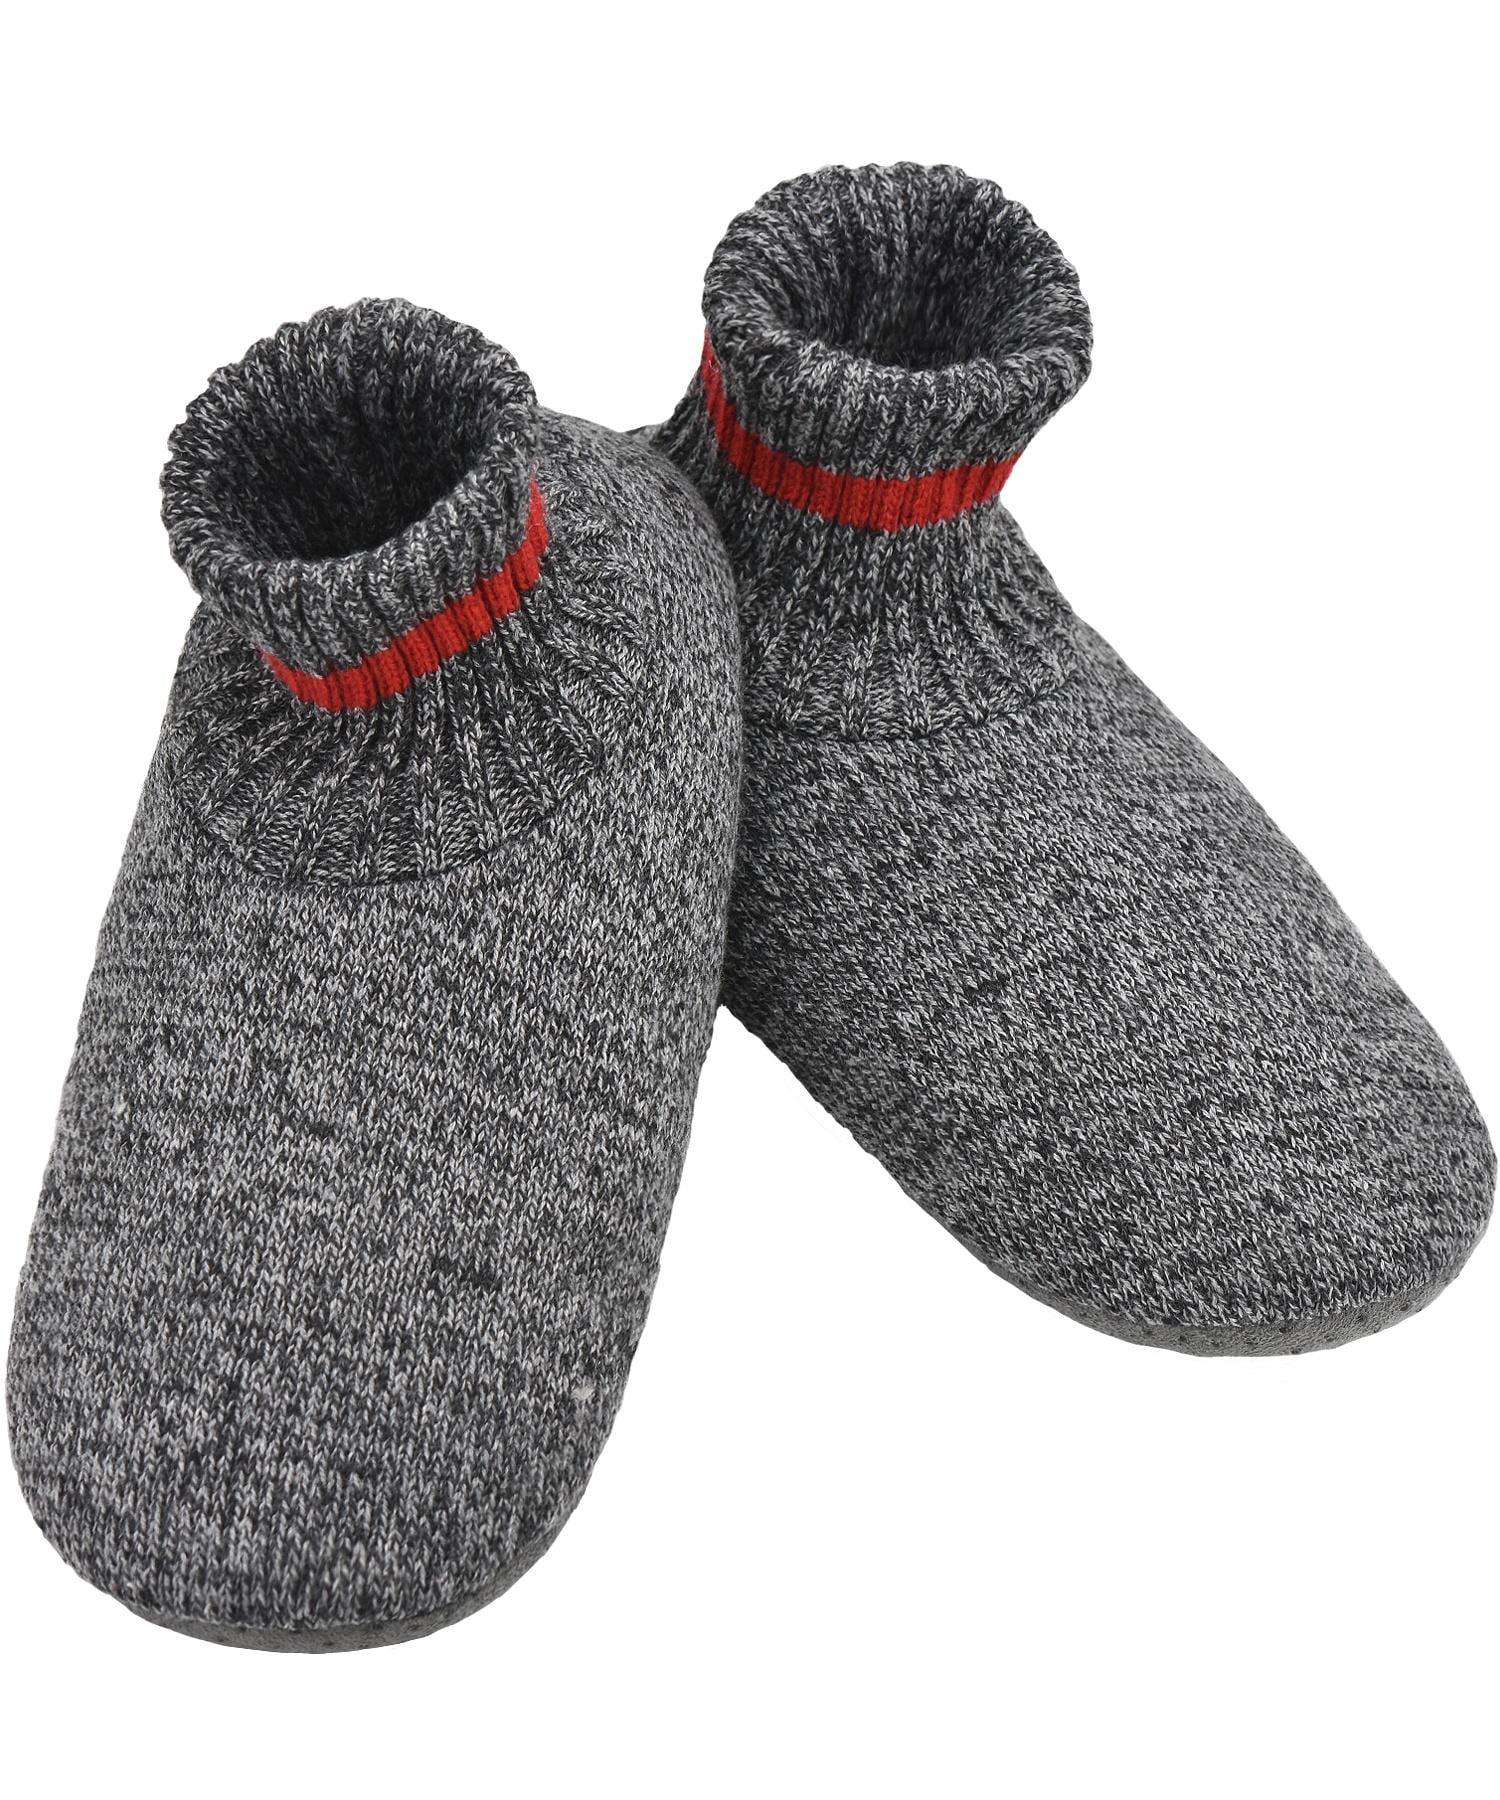 DICUIRD Men's Slippers Socks Autumn Winter Indoor Non-Skid House Slippers 